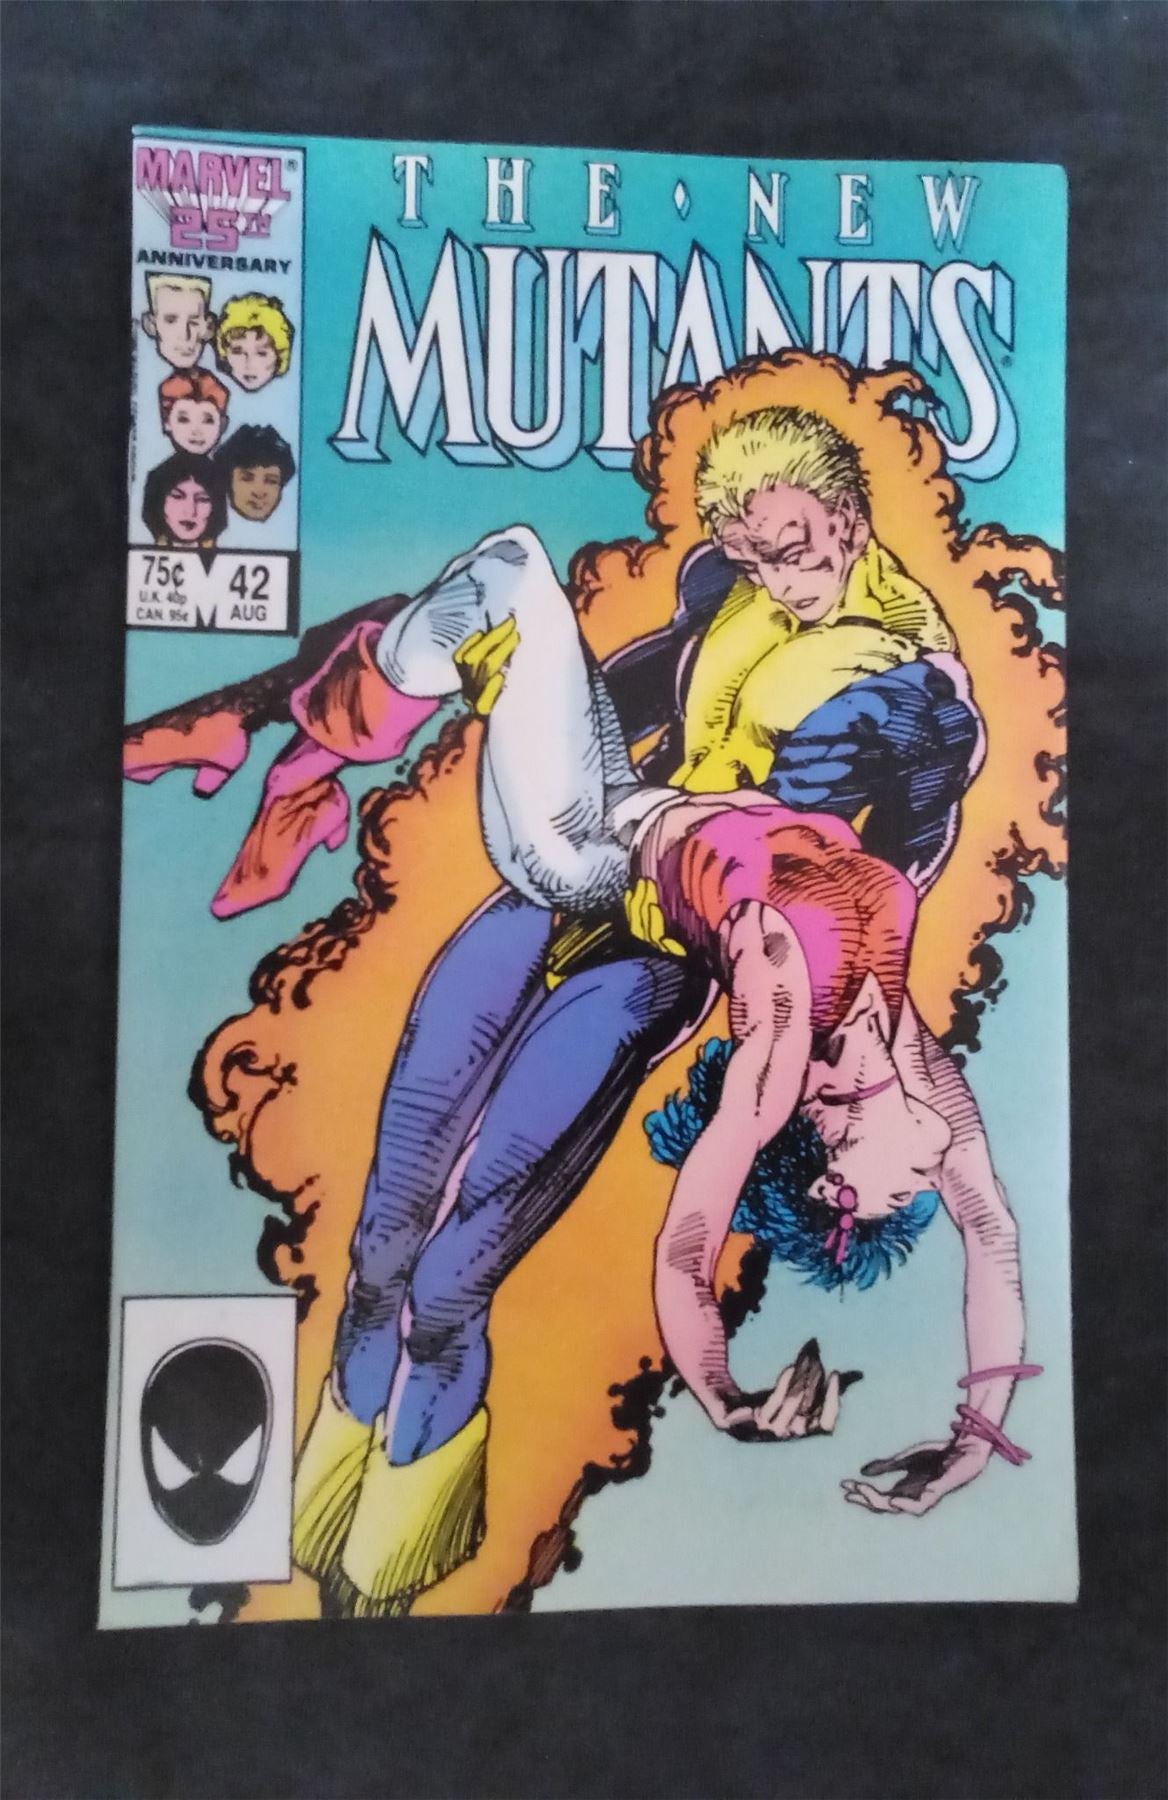 The New Mutants #42 1986 marvel Comic Book